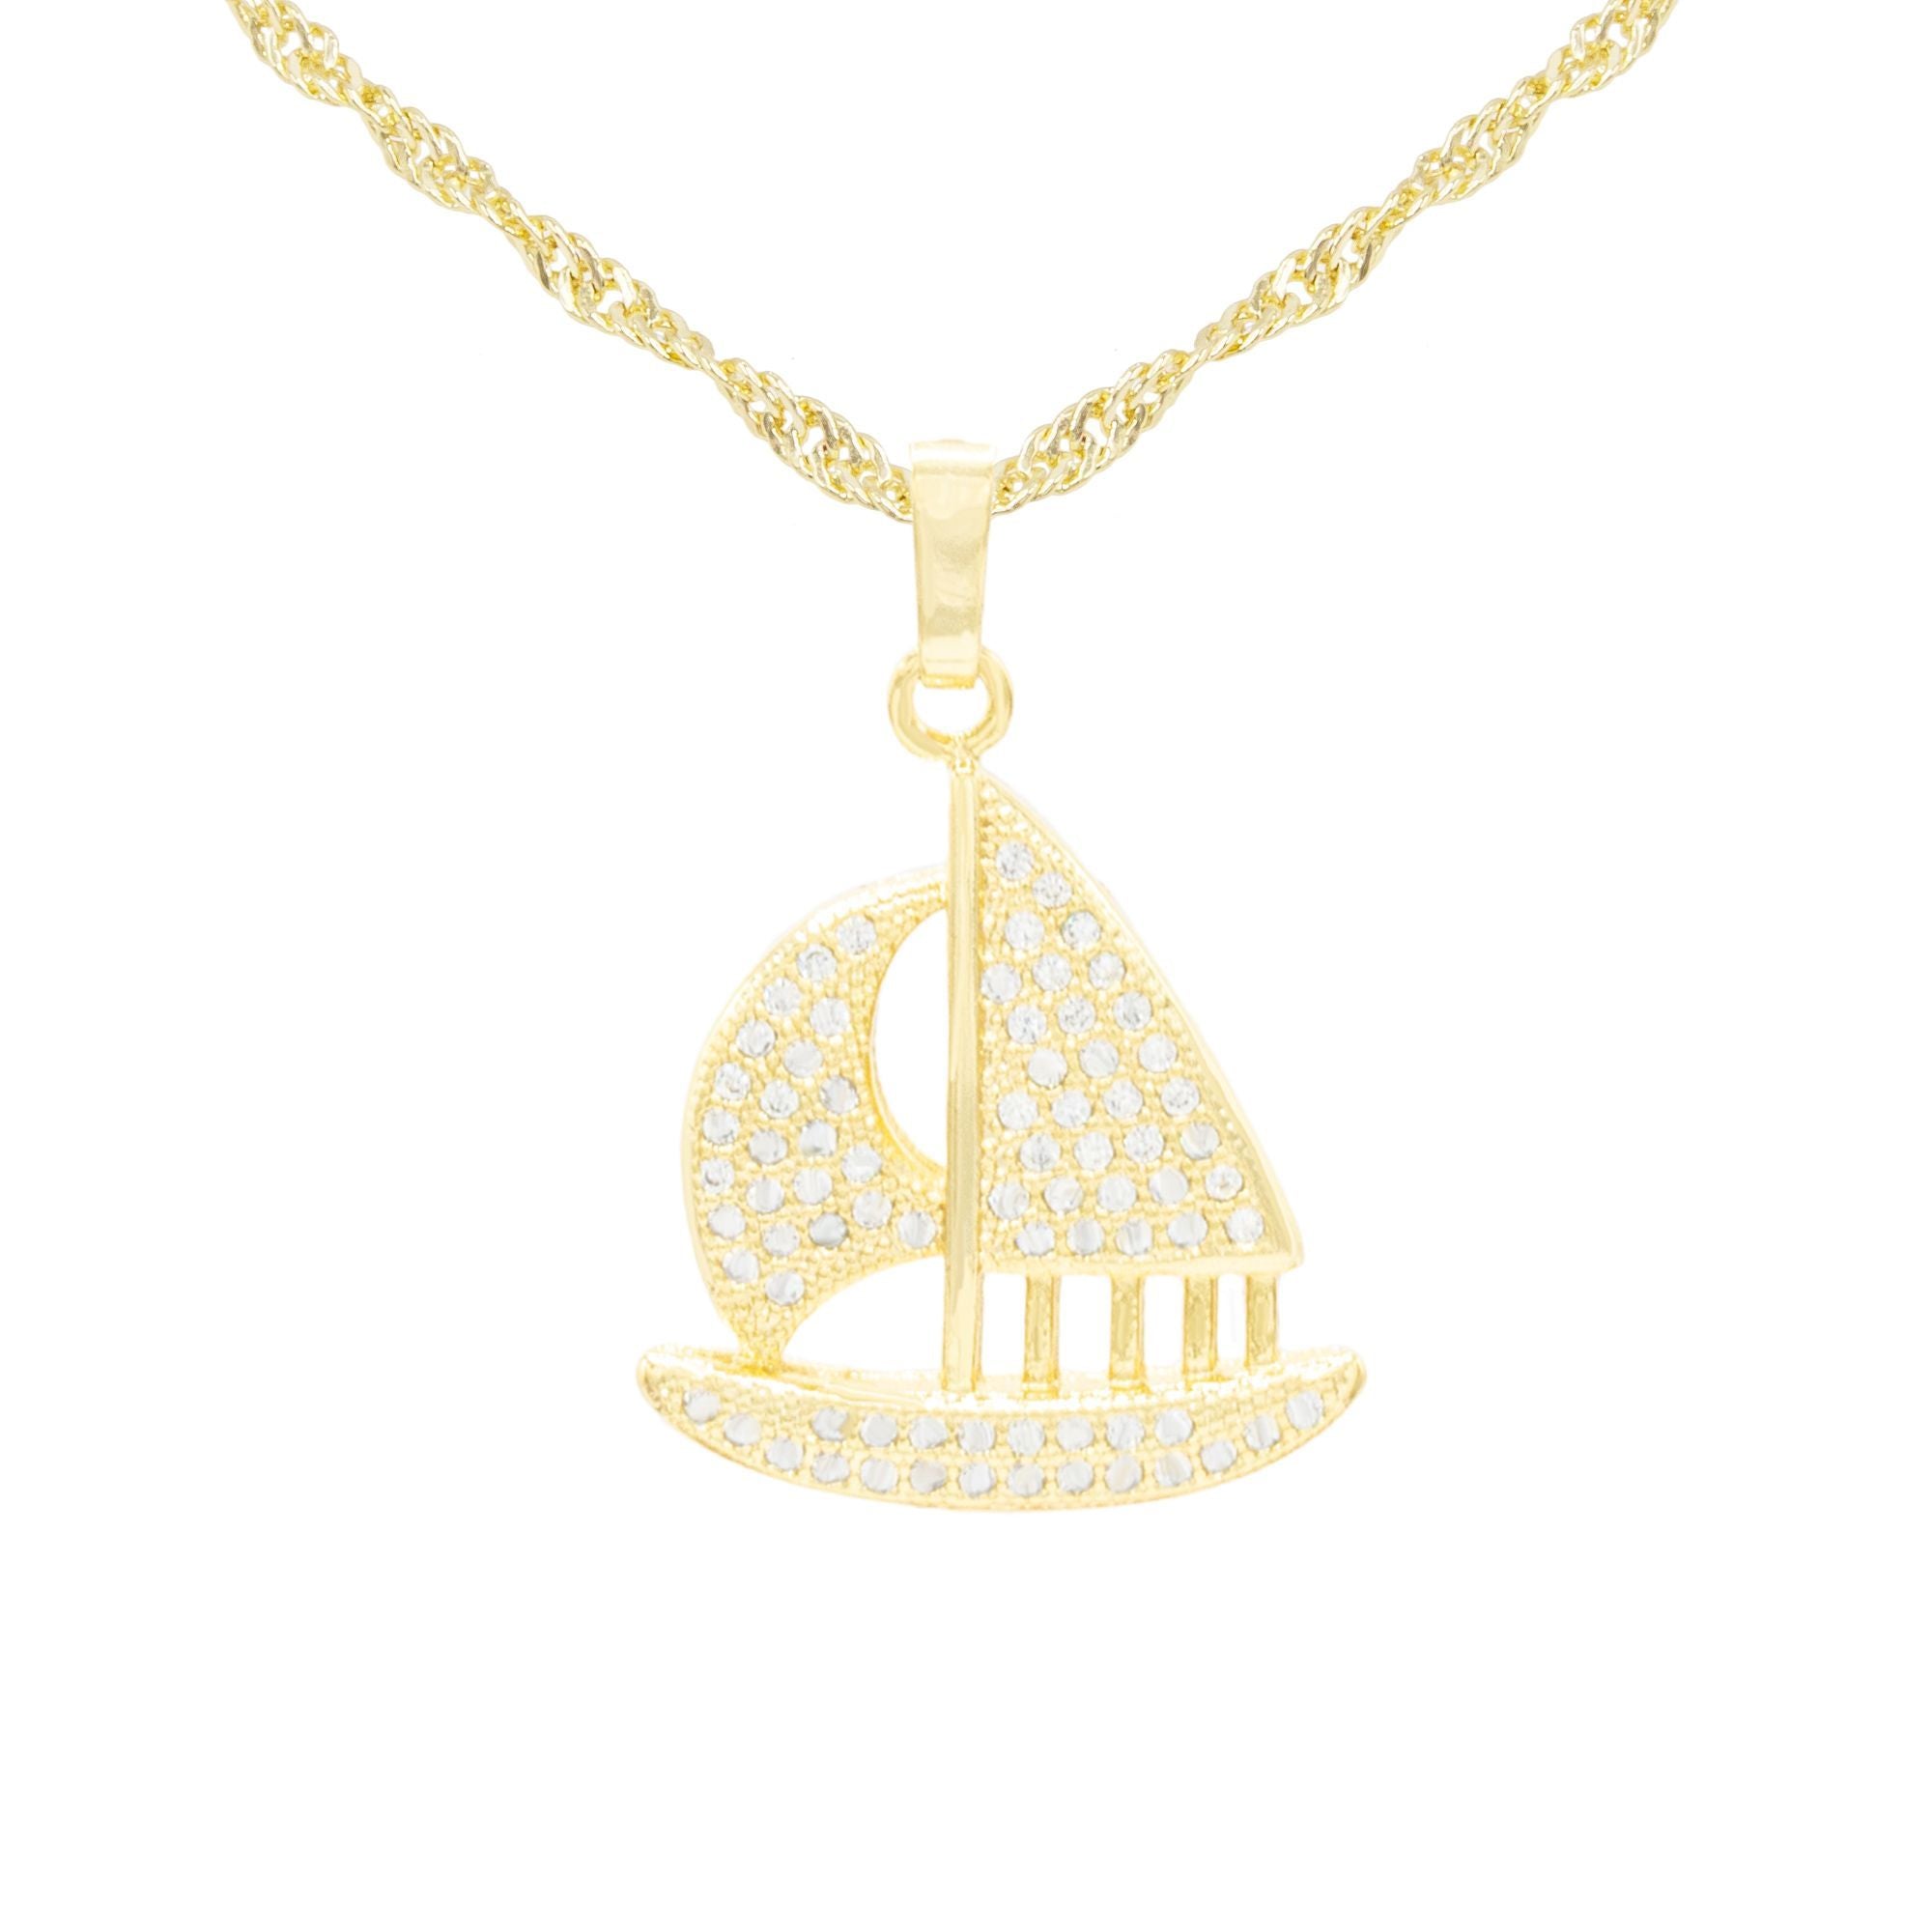 Cubic Zirconia Sail Boat Pendant 14K Gold Filled Necklace Set